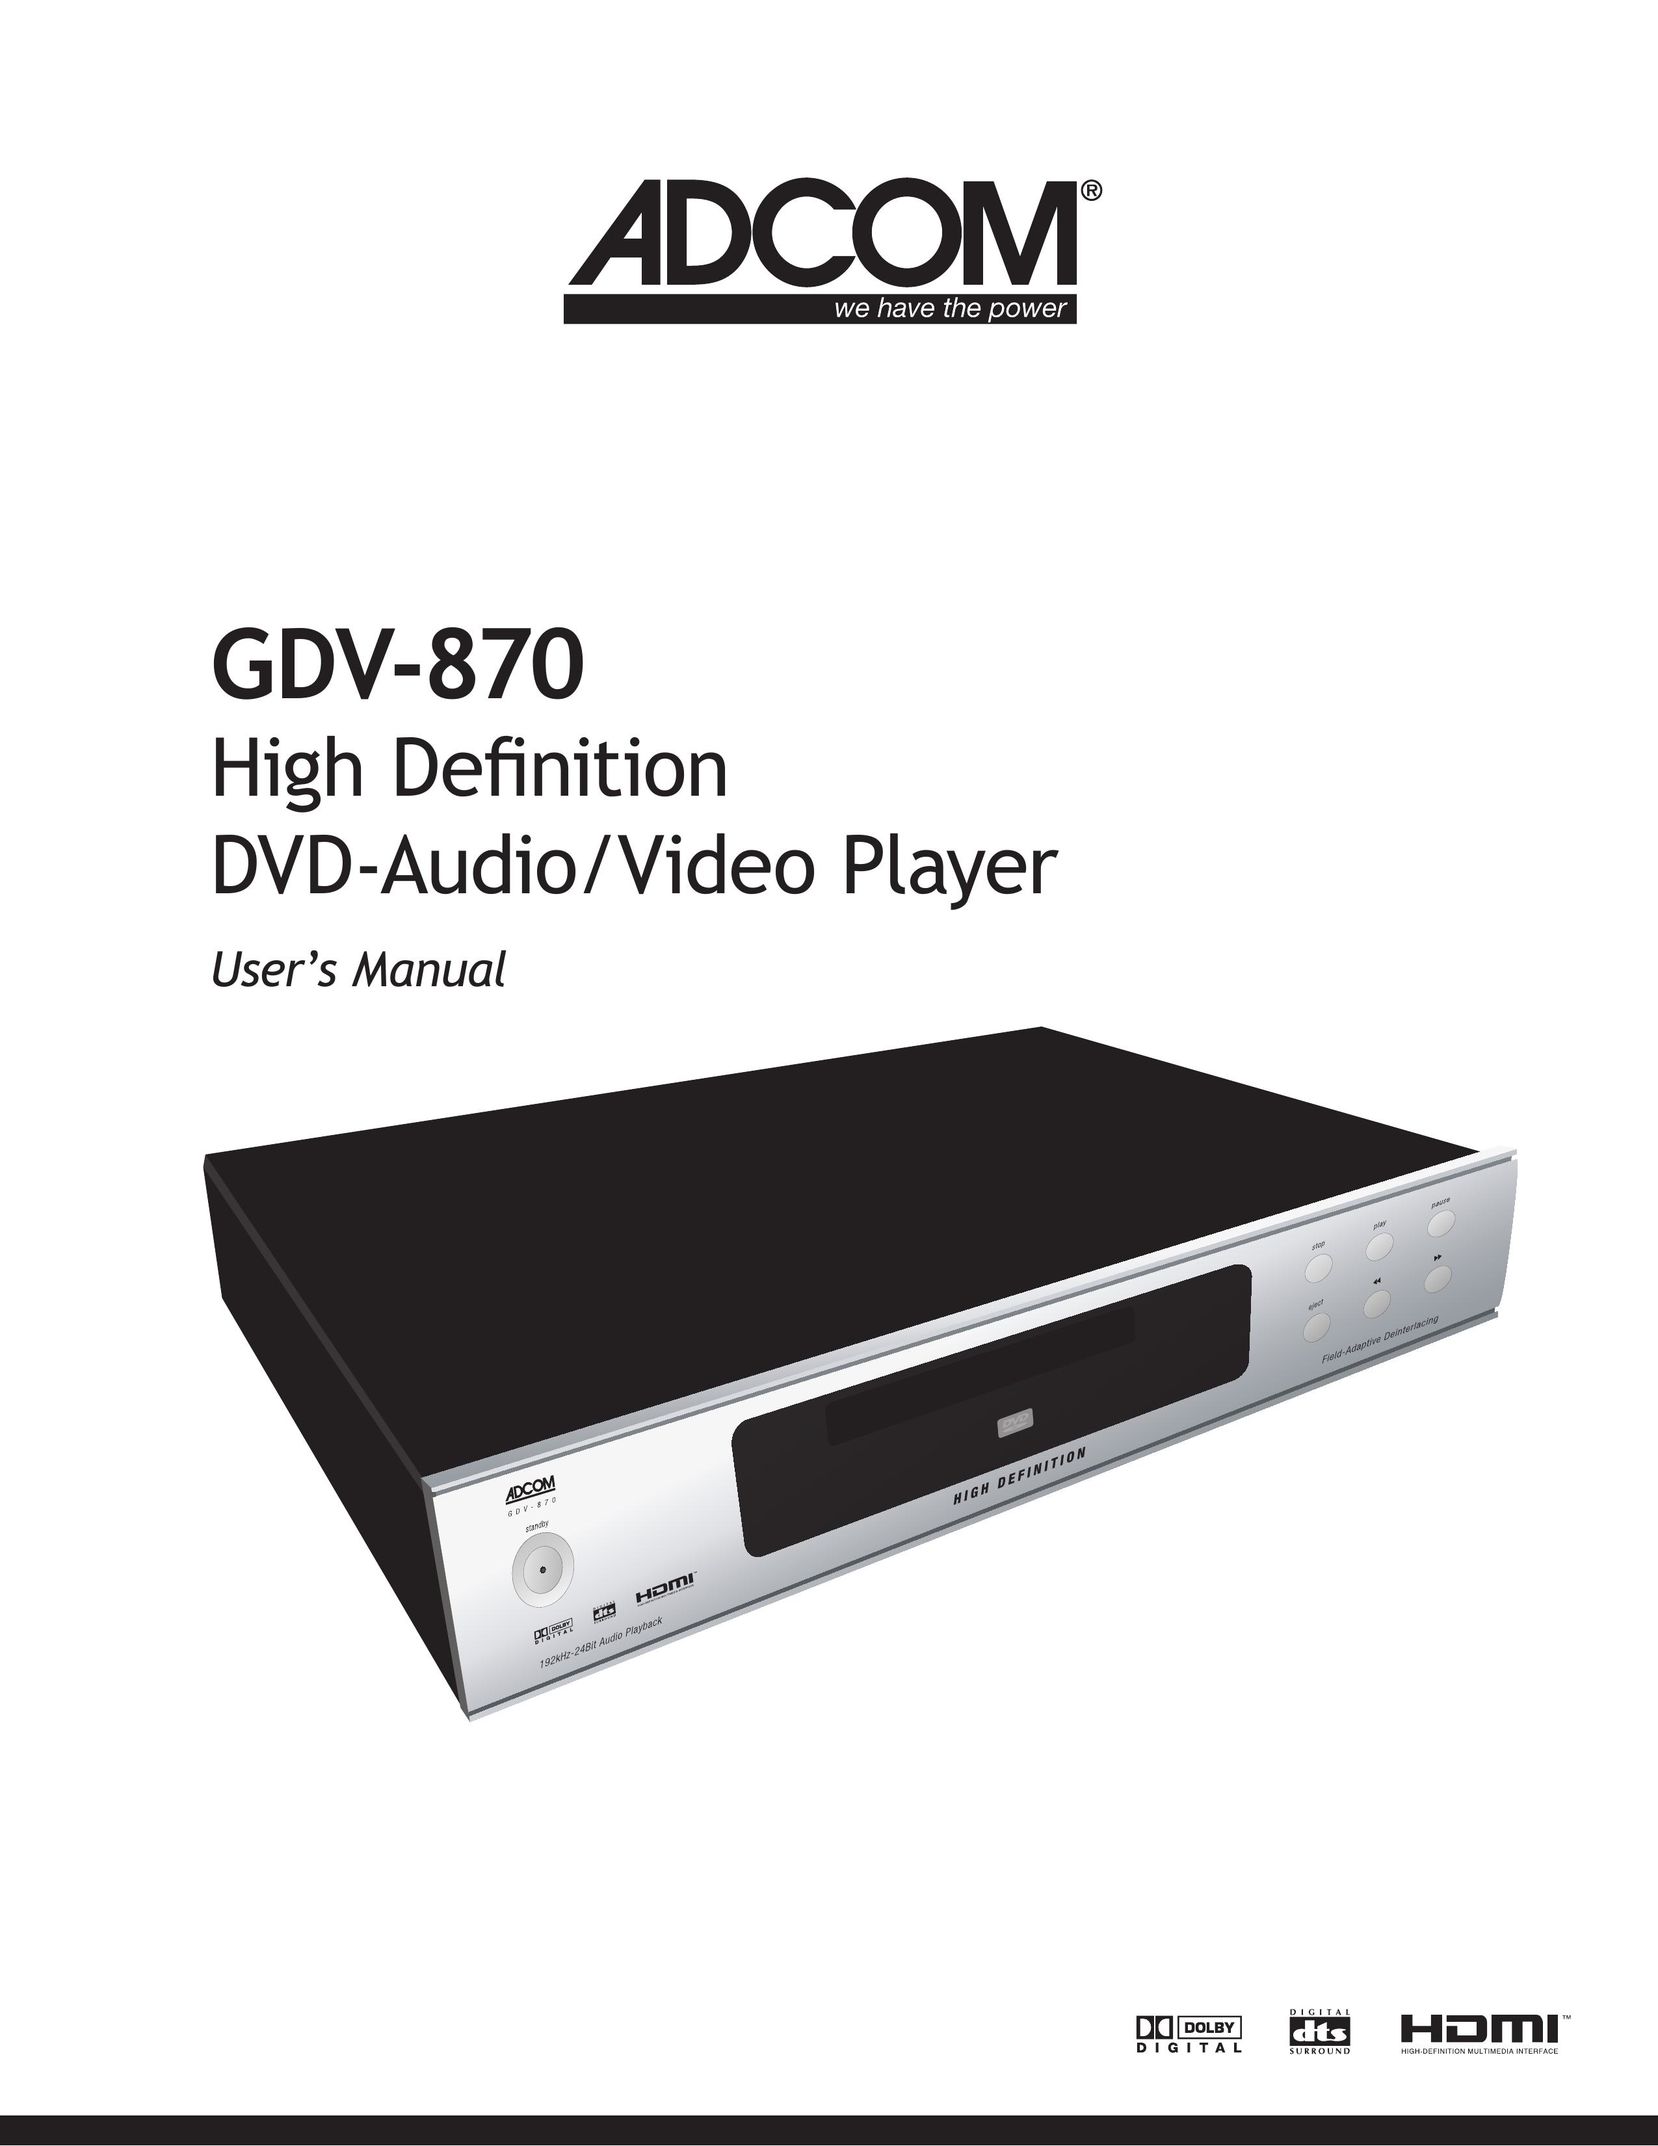 Adcom GDV-870 DVD Player User Manual (Page 1)